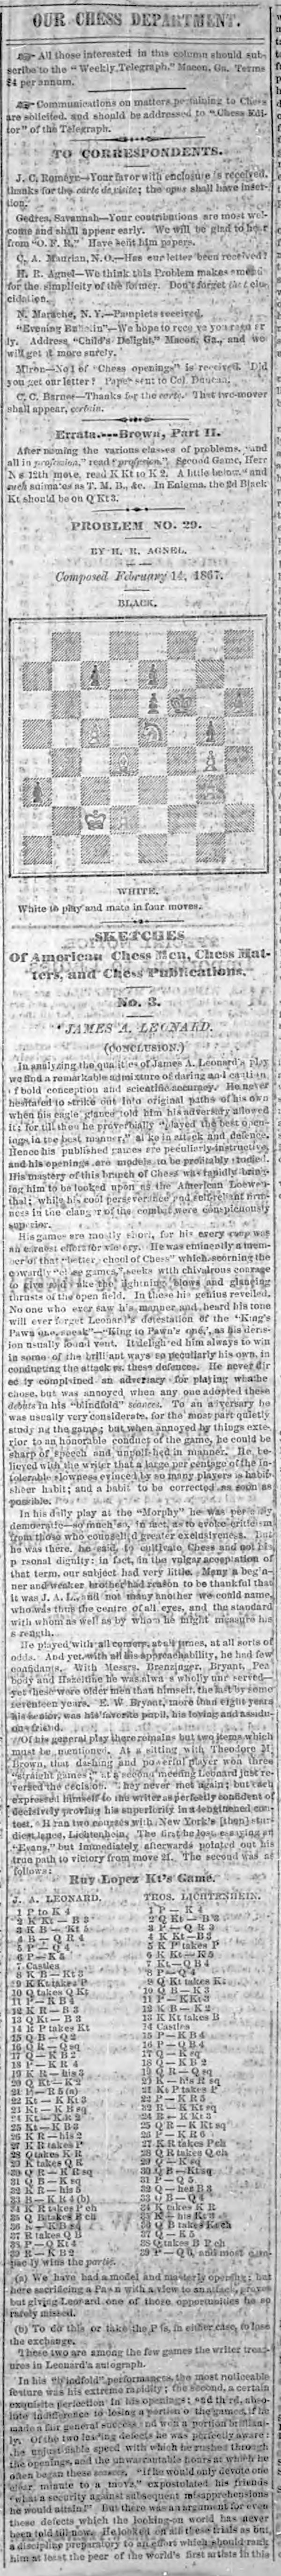 1867.03.01-01 Macon Georgia Weekly Telegraph.jpg